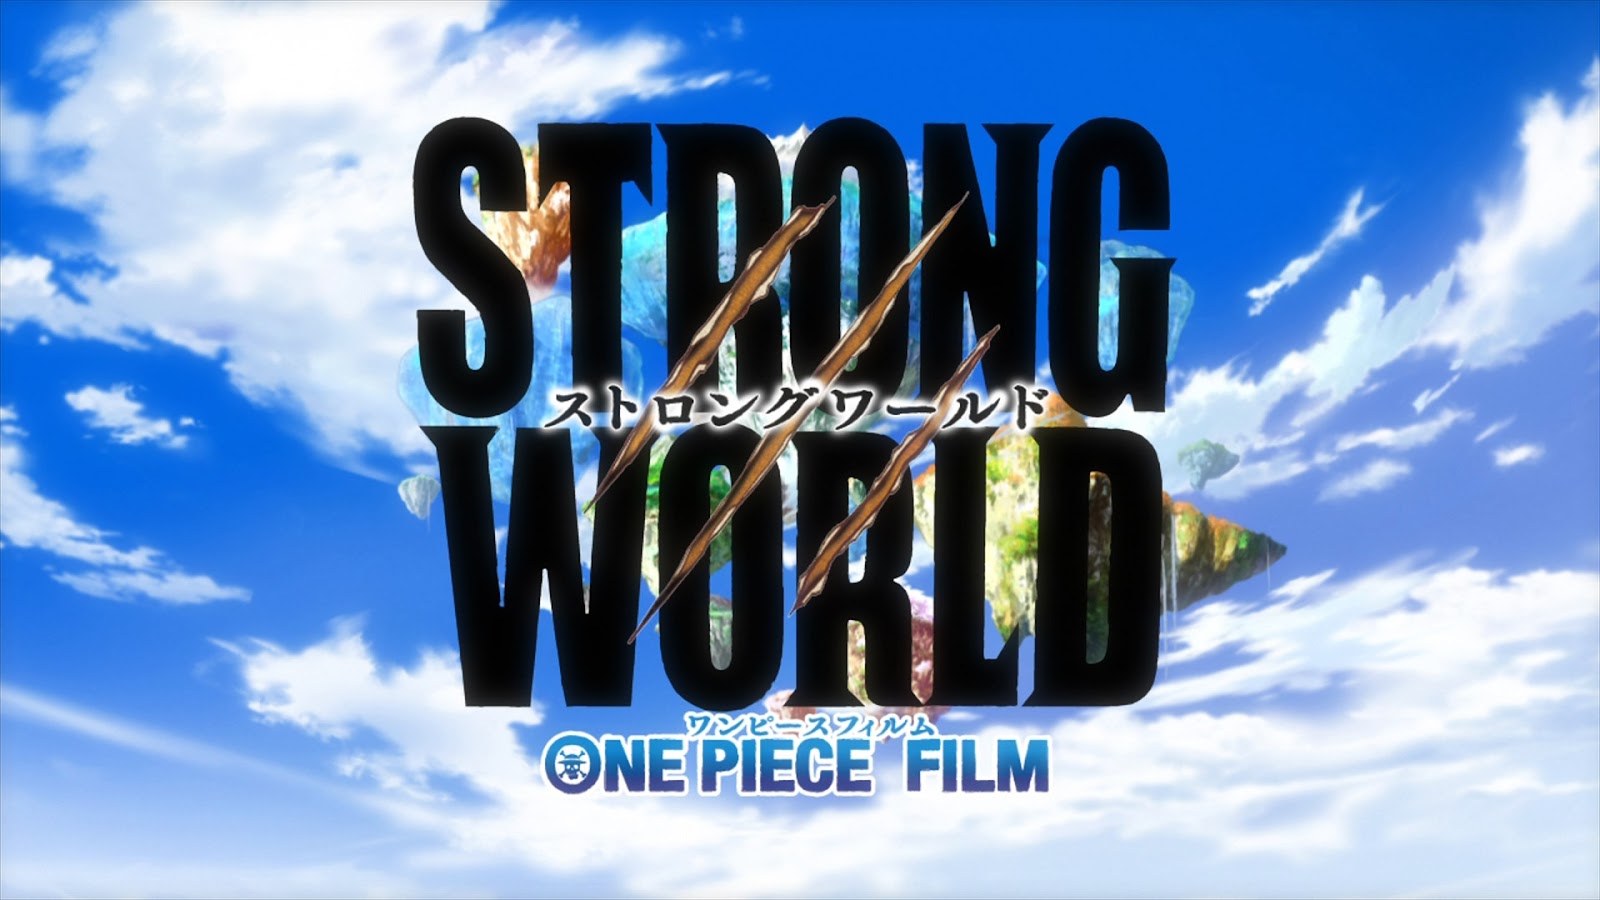 One Piece Film: Strong World (2009) 1080p BDrip Latino